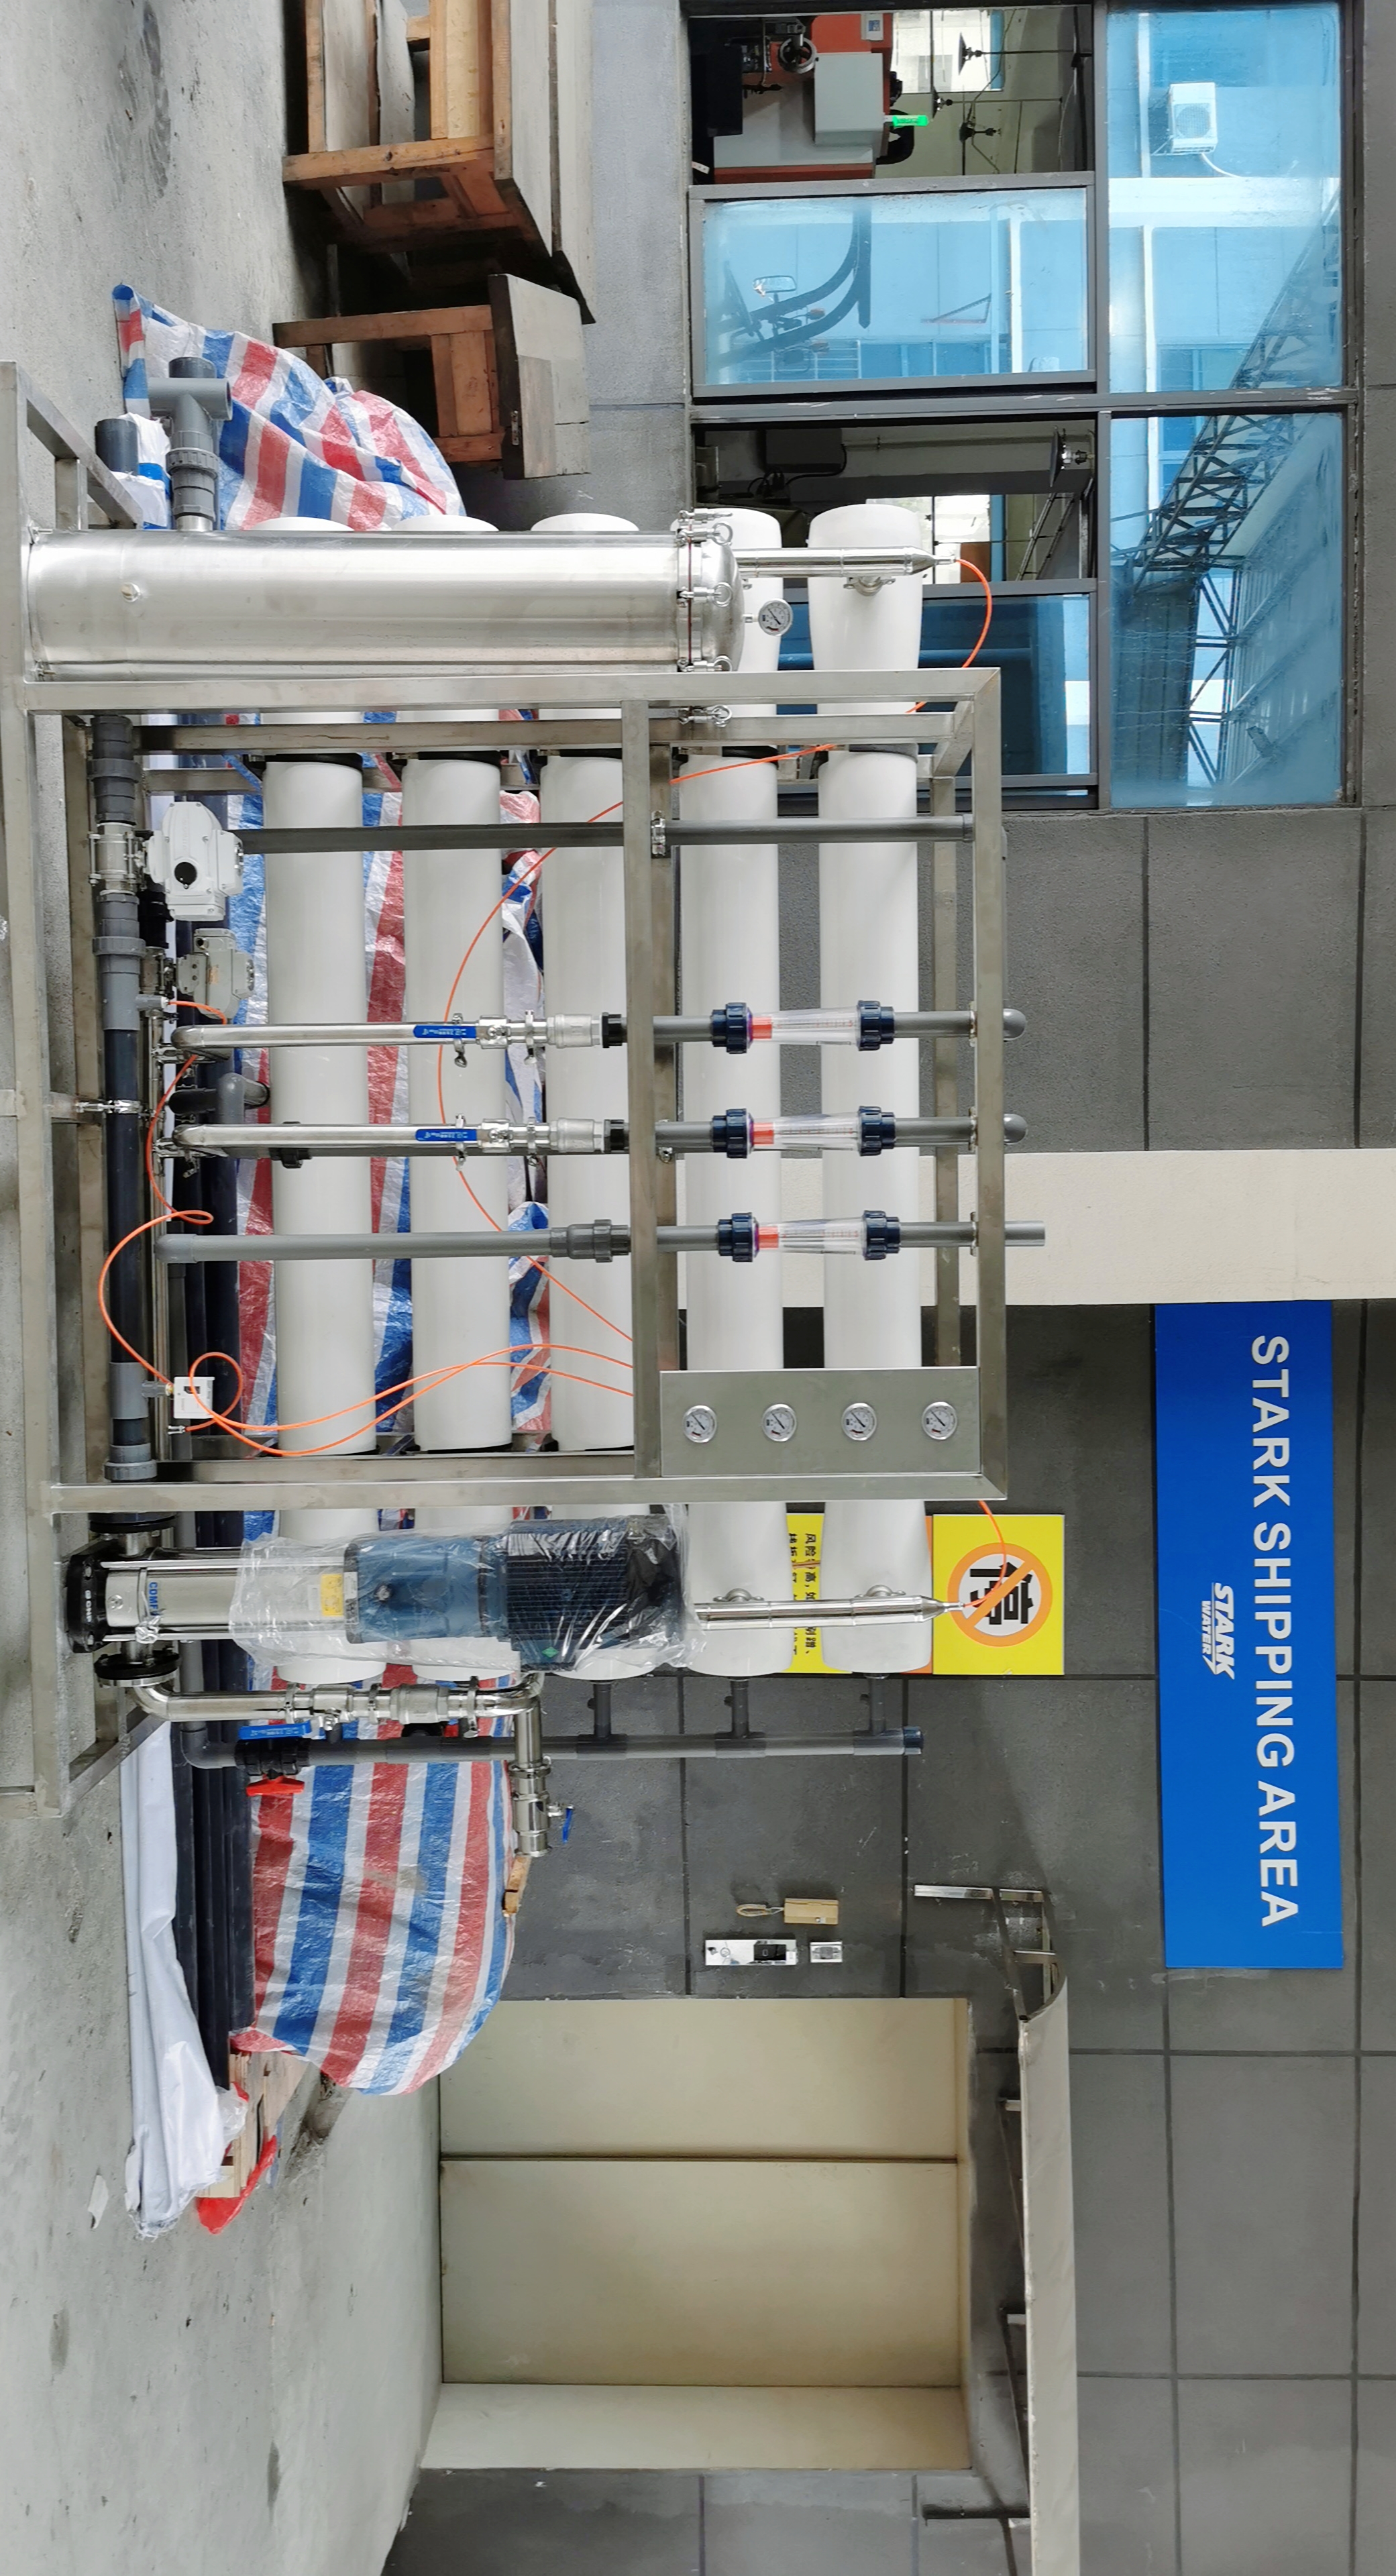 10 टी आरओ सिस्टम विलवणीकरण जल उपचार फैक्टरी आपूर्ति पेयजल शोधन मशीन रिवर्स ऑस्मोसिस उपकरण